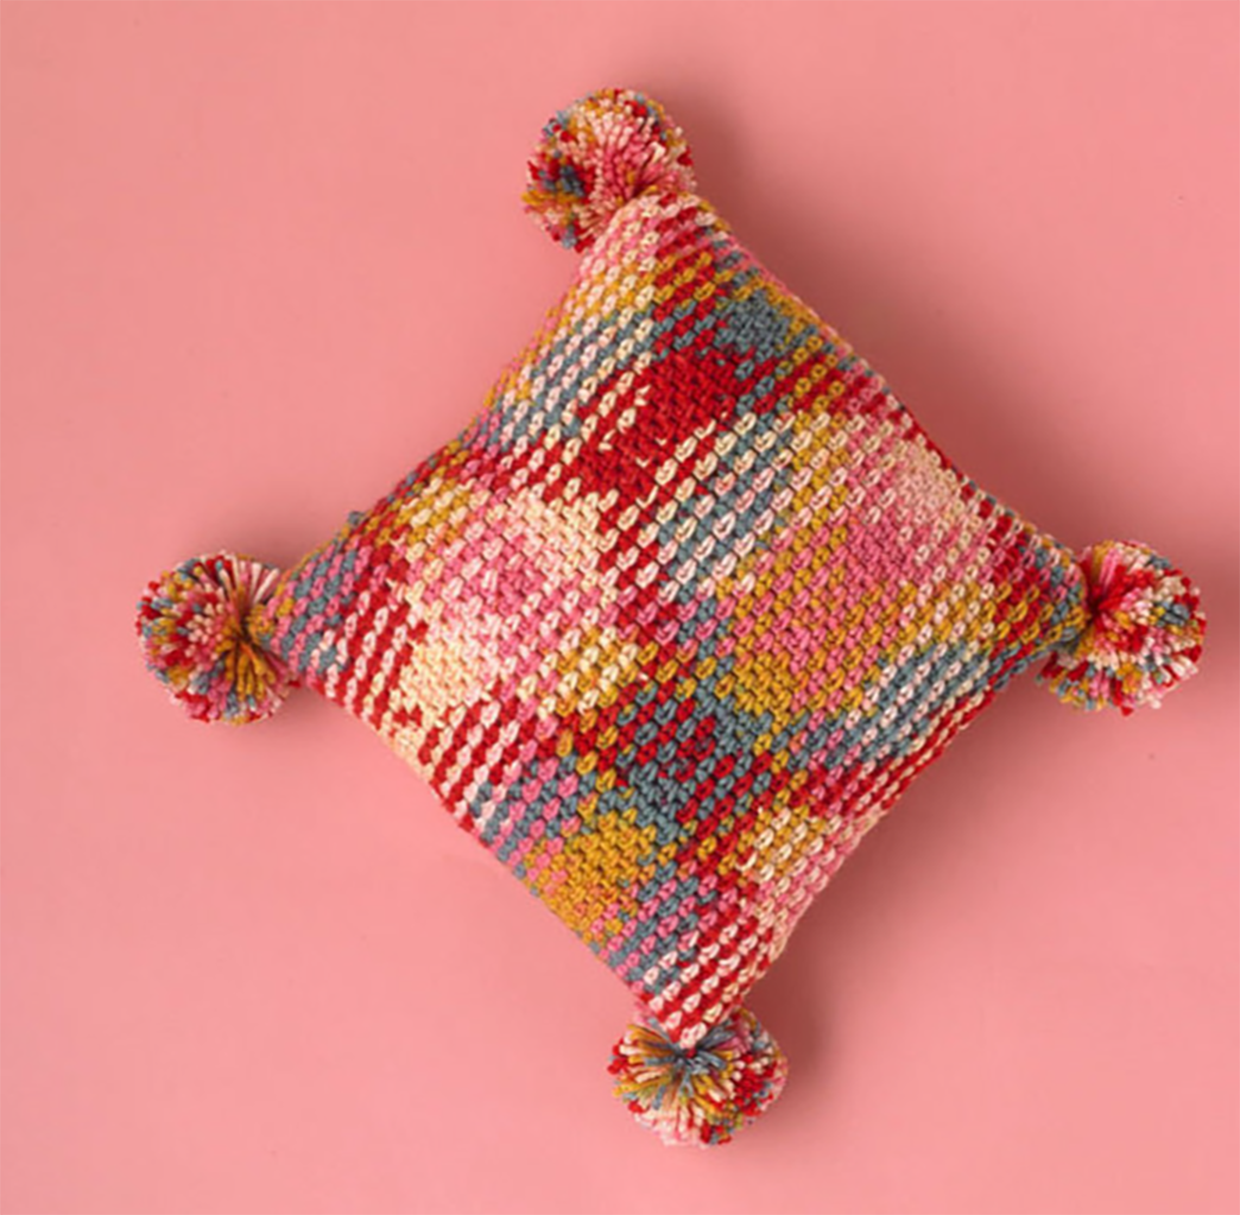 amateur argyle planned pooling crochet pattern